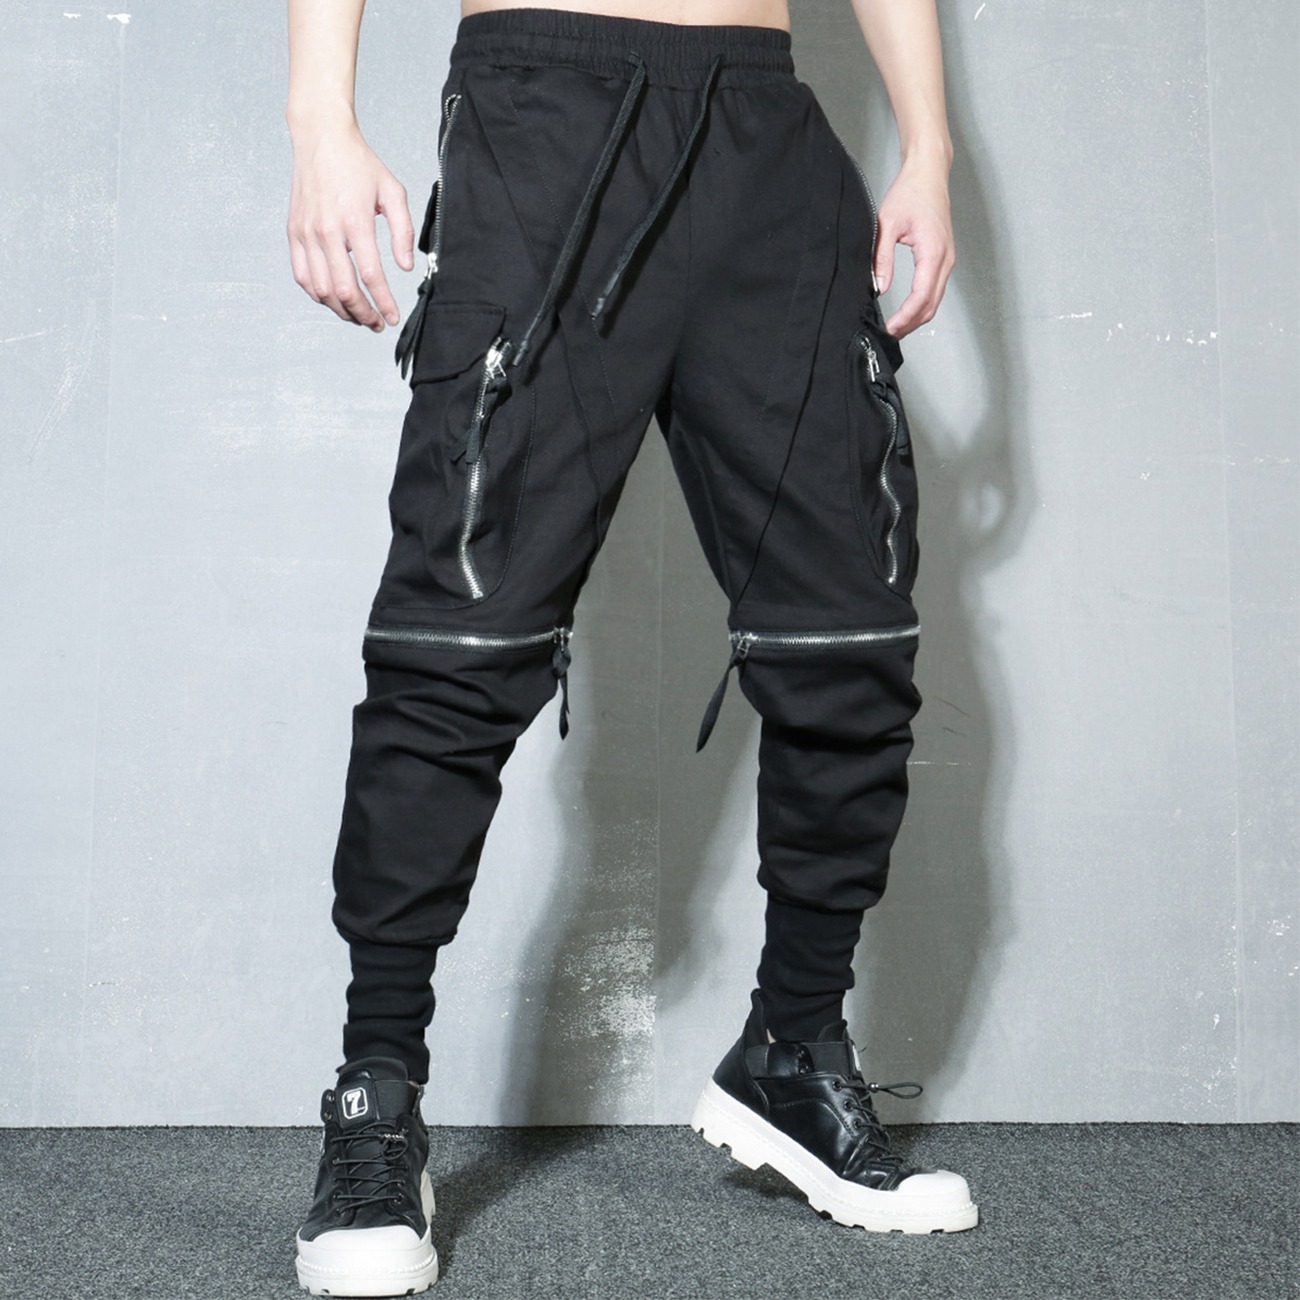 Cyberpunk pants with zippers - Cyberpunk Clothing